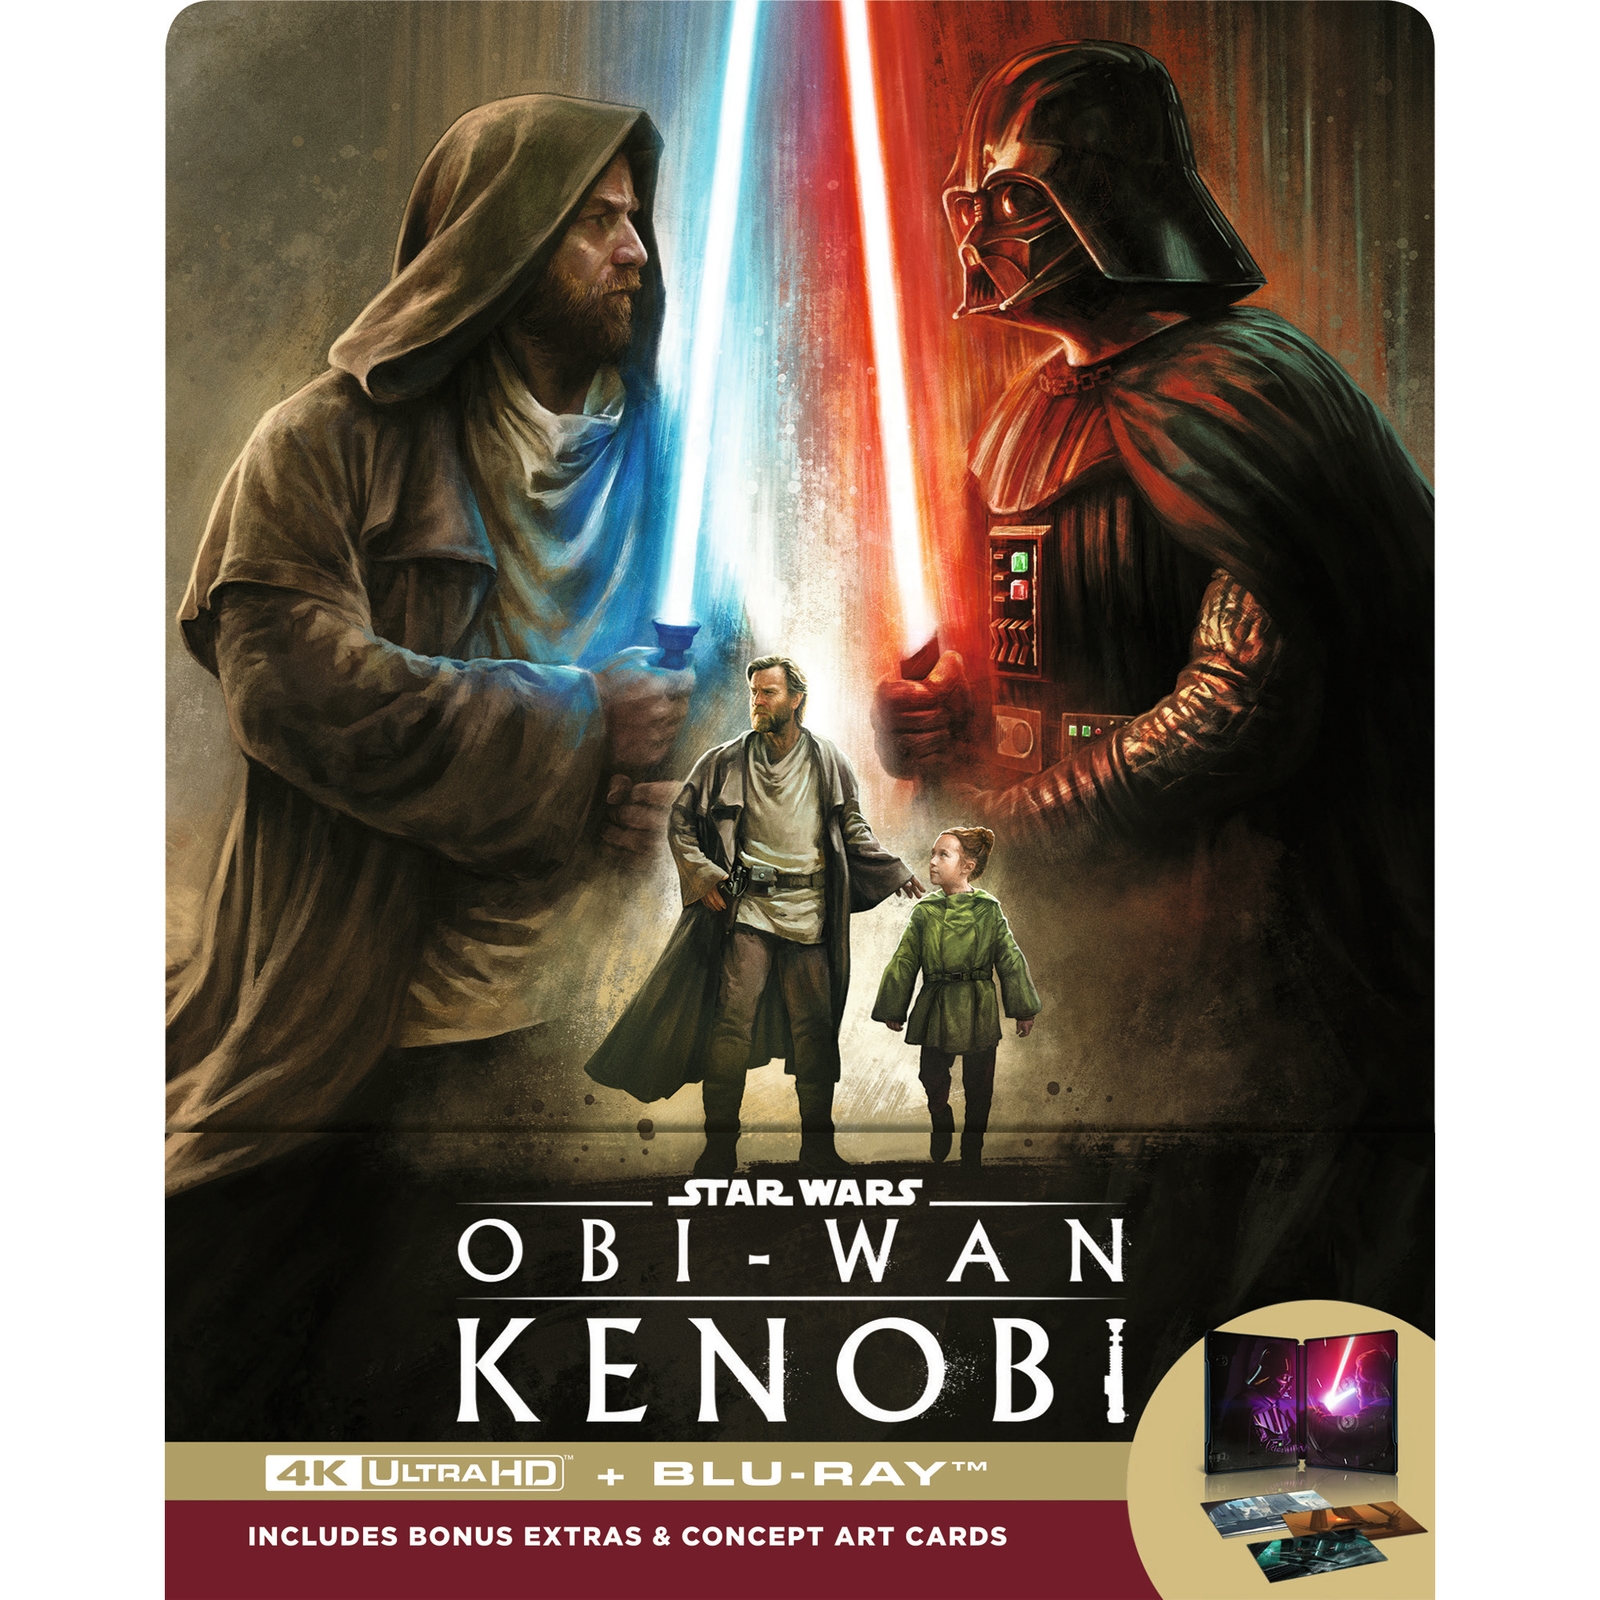 Star Wars Obi-Wan Kenobi SteelBook 4K Ultra HD & Blu-ray (Disney+ Original includes ArtCards)